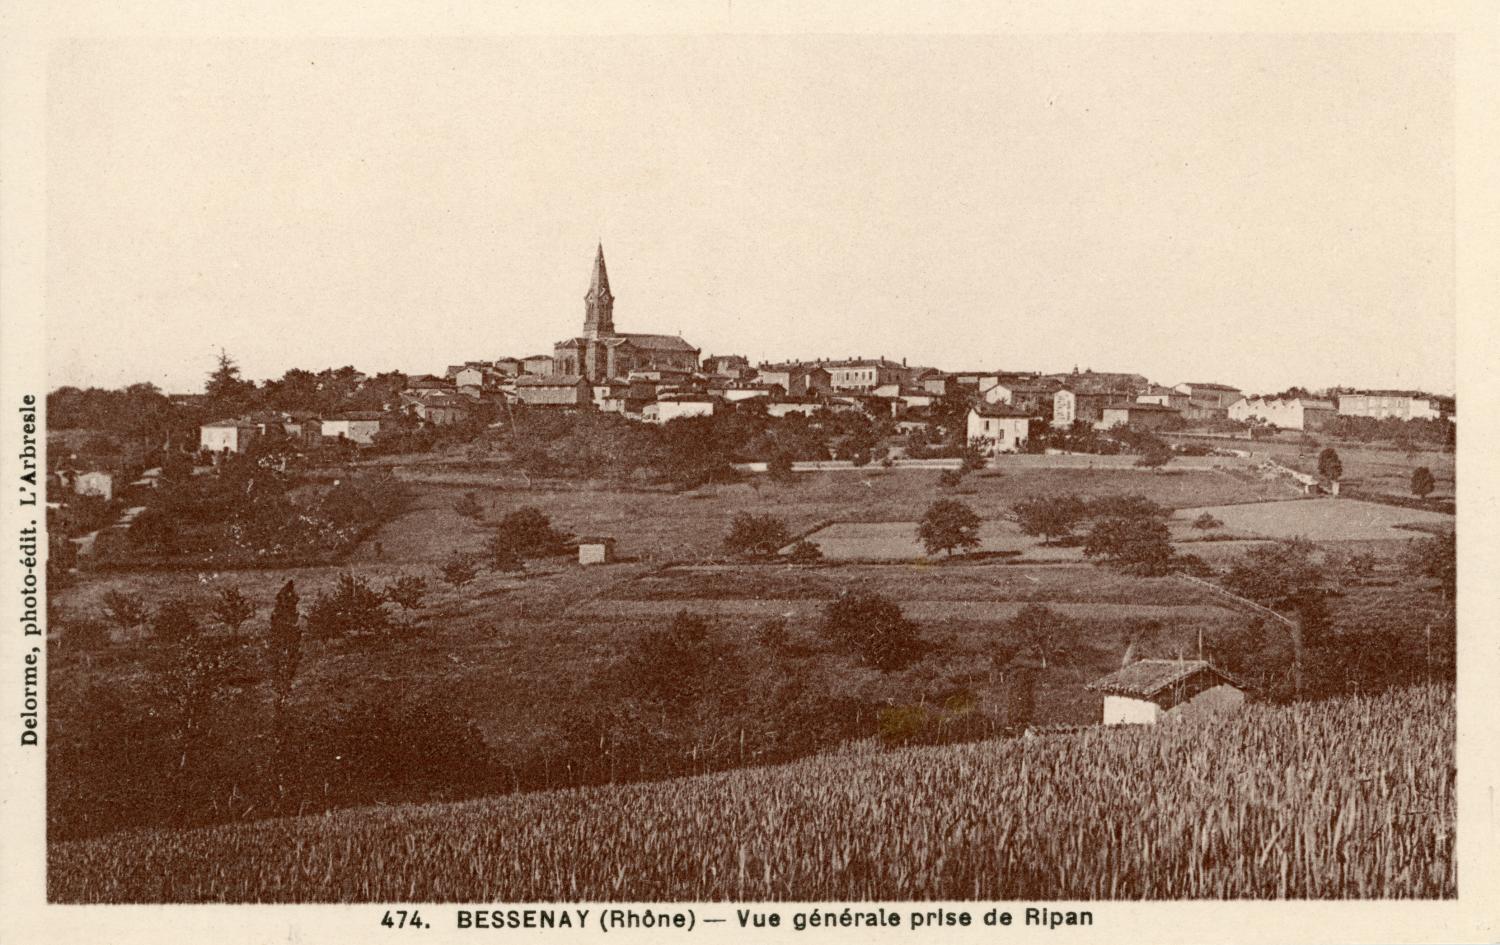 Bessenay (Rhône). - Vue générale prise de Ripan